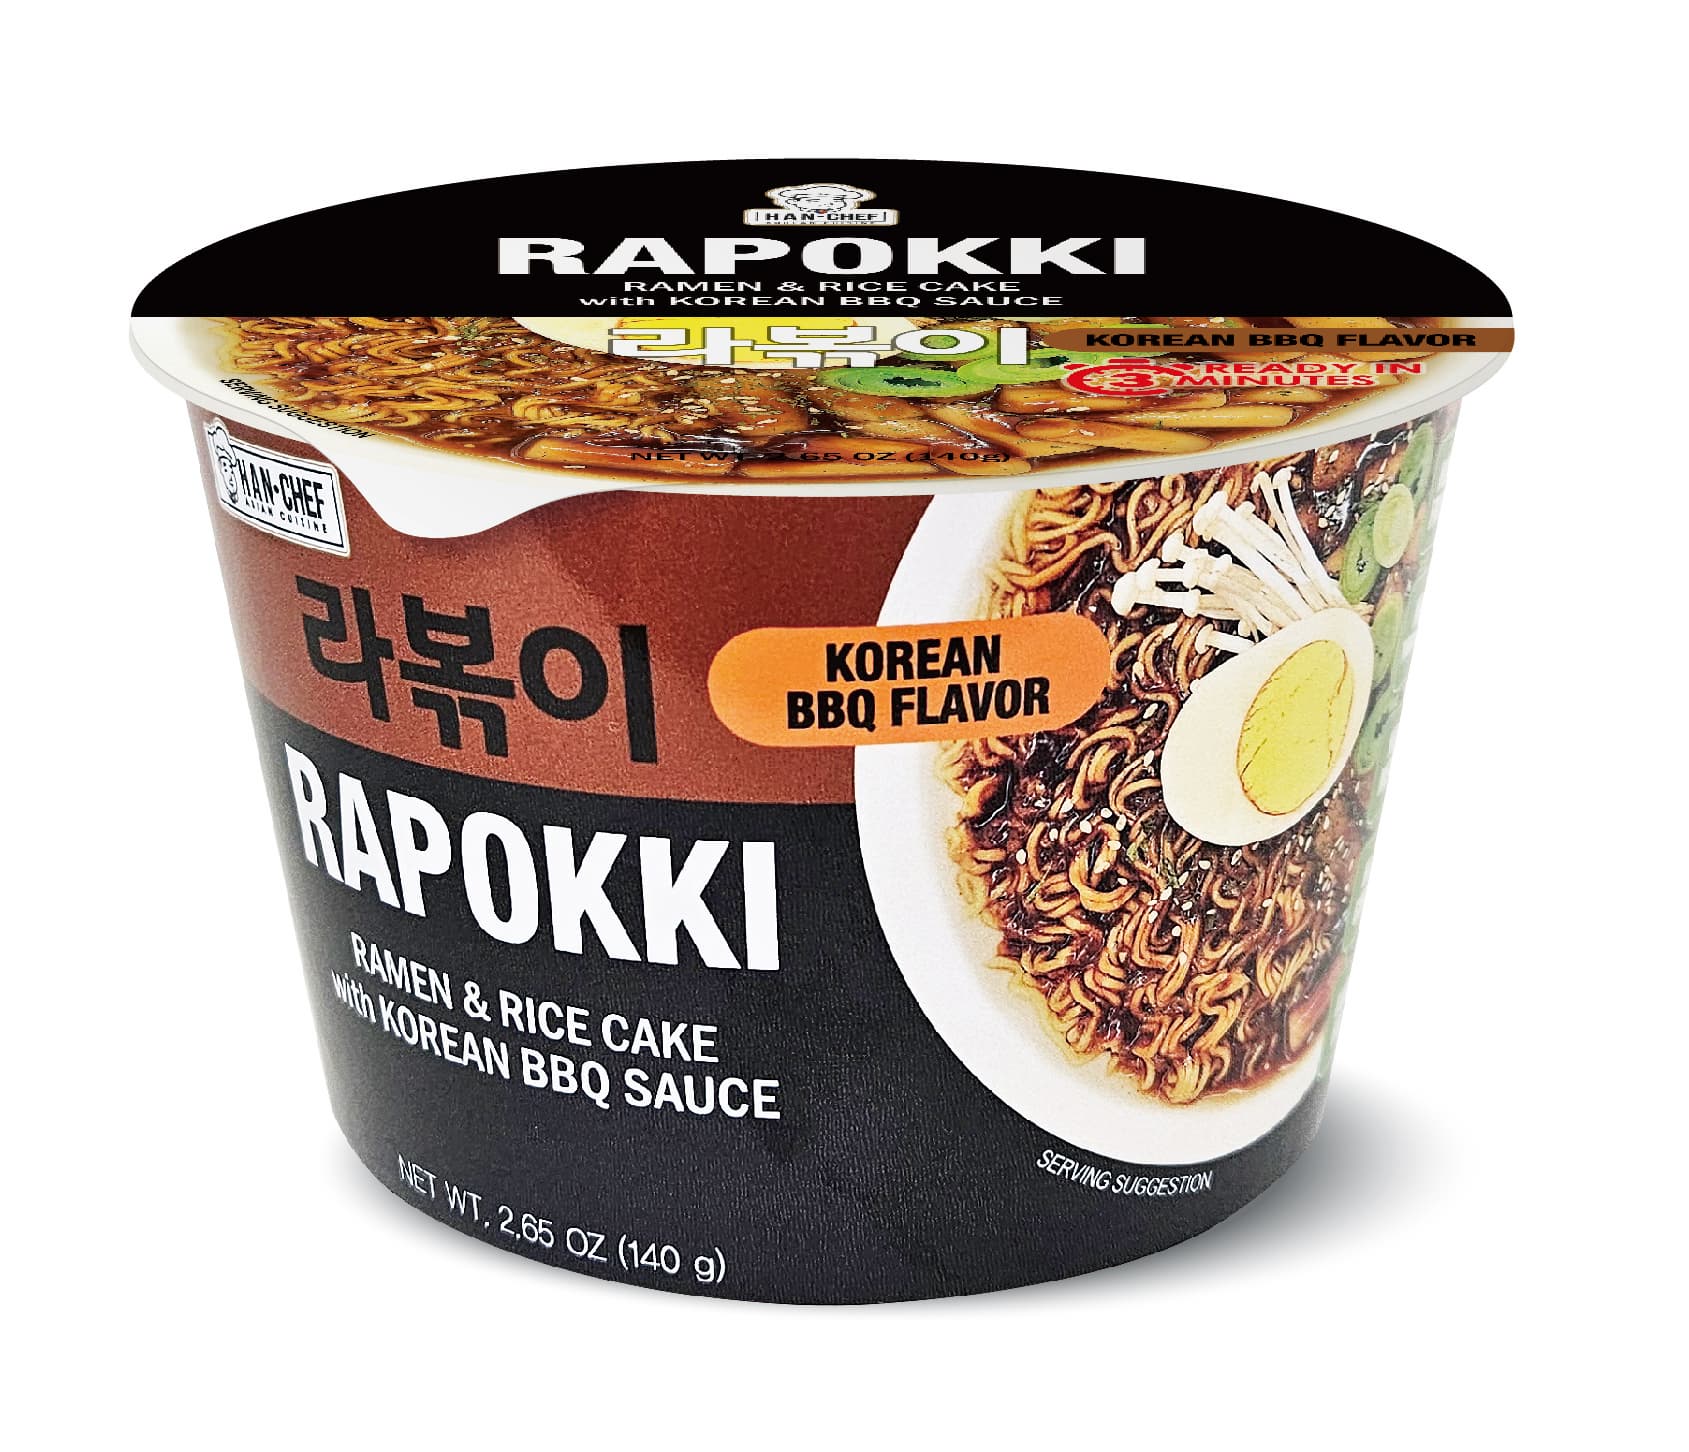 HAN_CHEF Cup Noodles Series __RAPOKKI_Korean BBQ Flavor